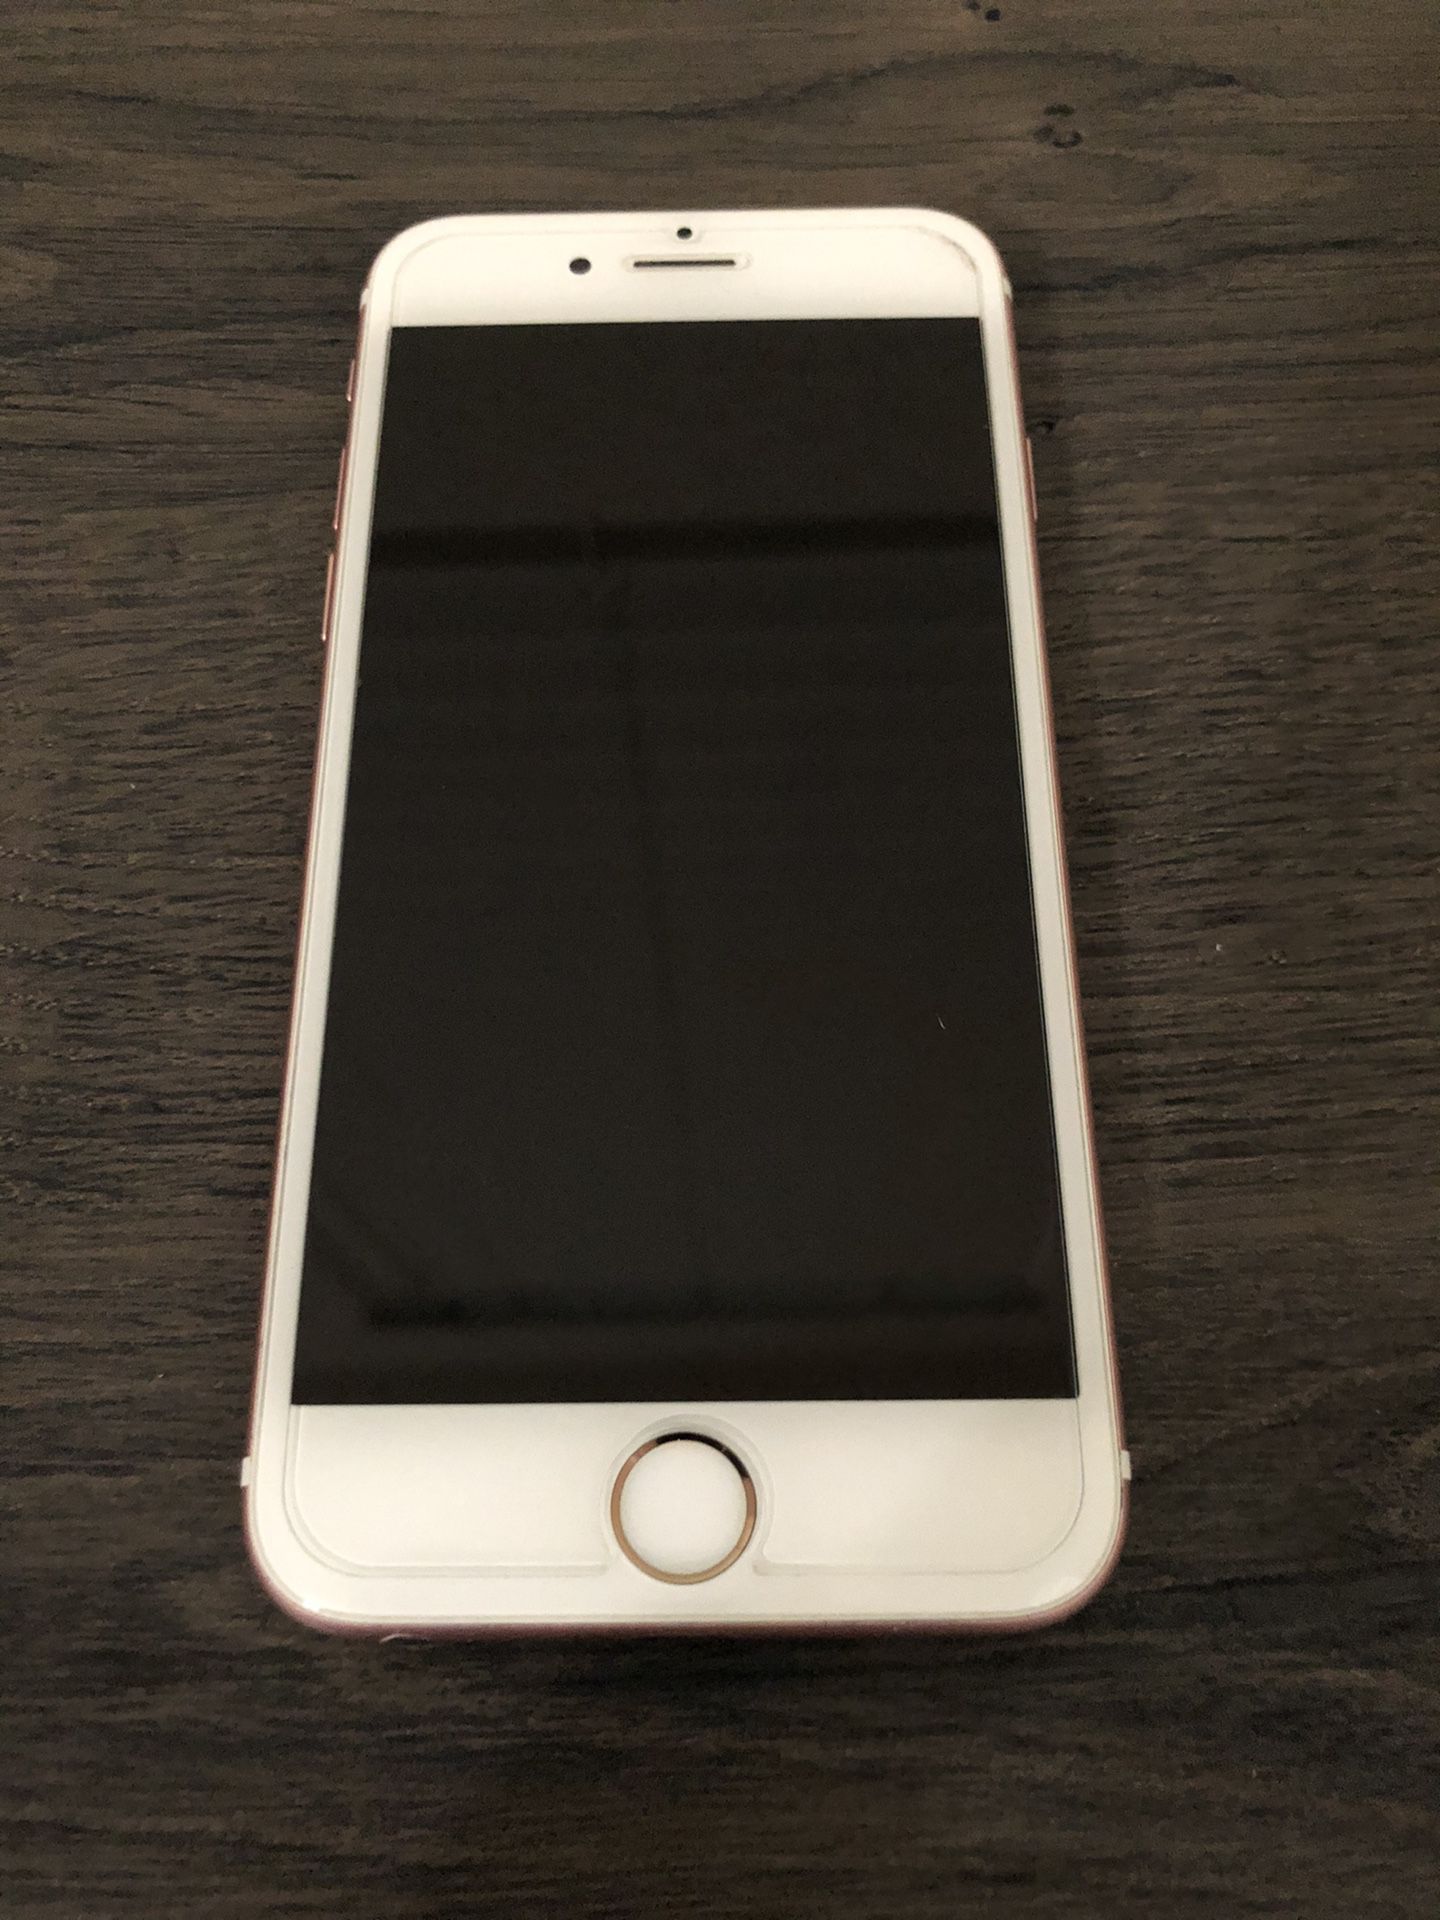 Apple iPhone 6S, 128GB, Rose Gold (unlocked)